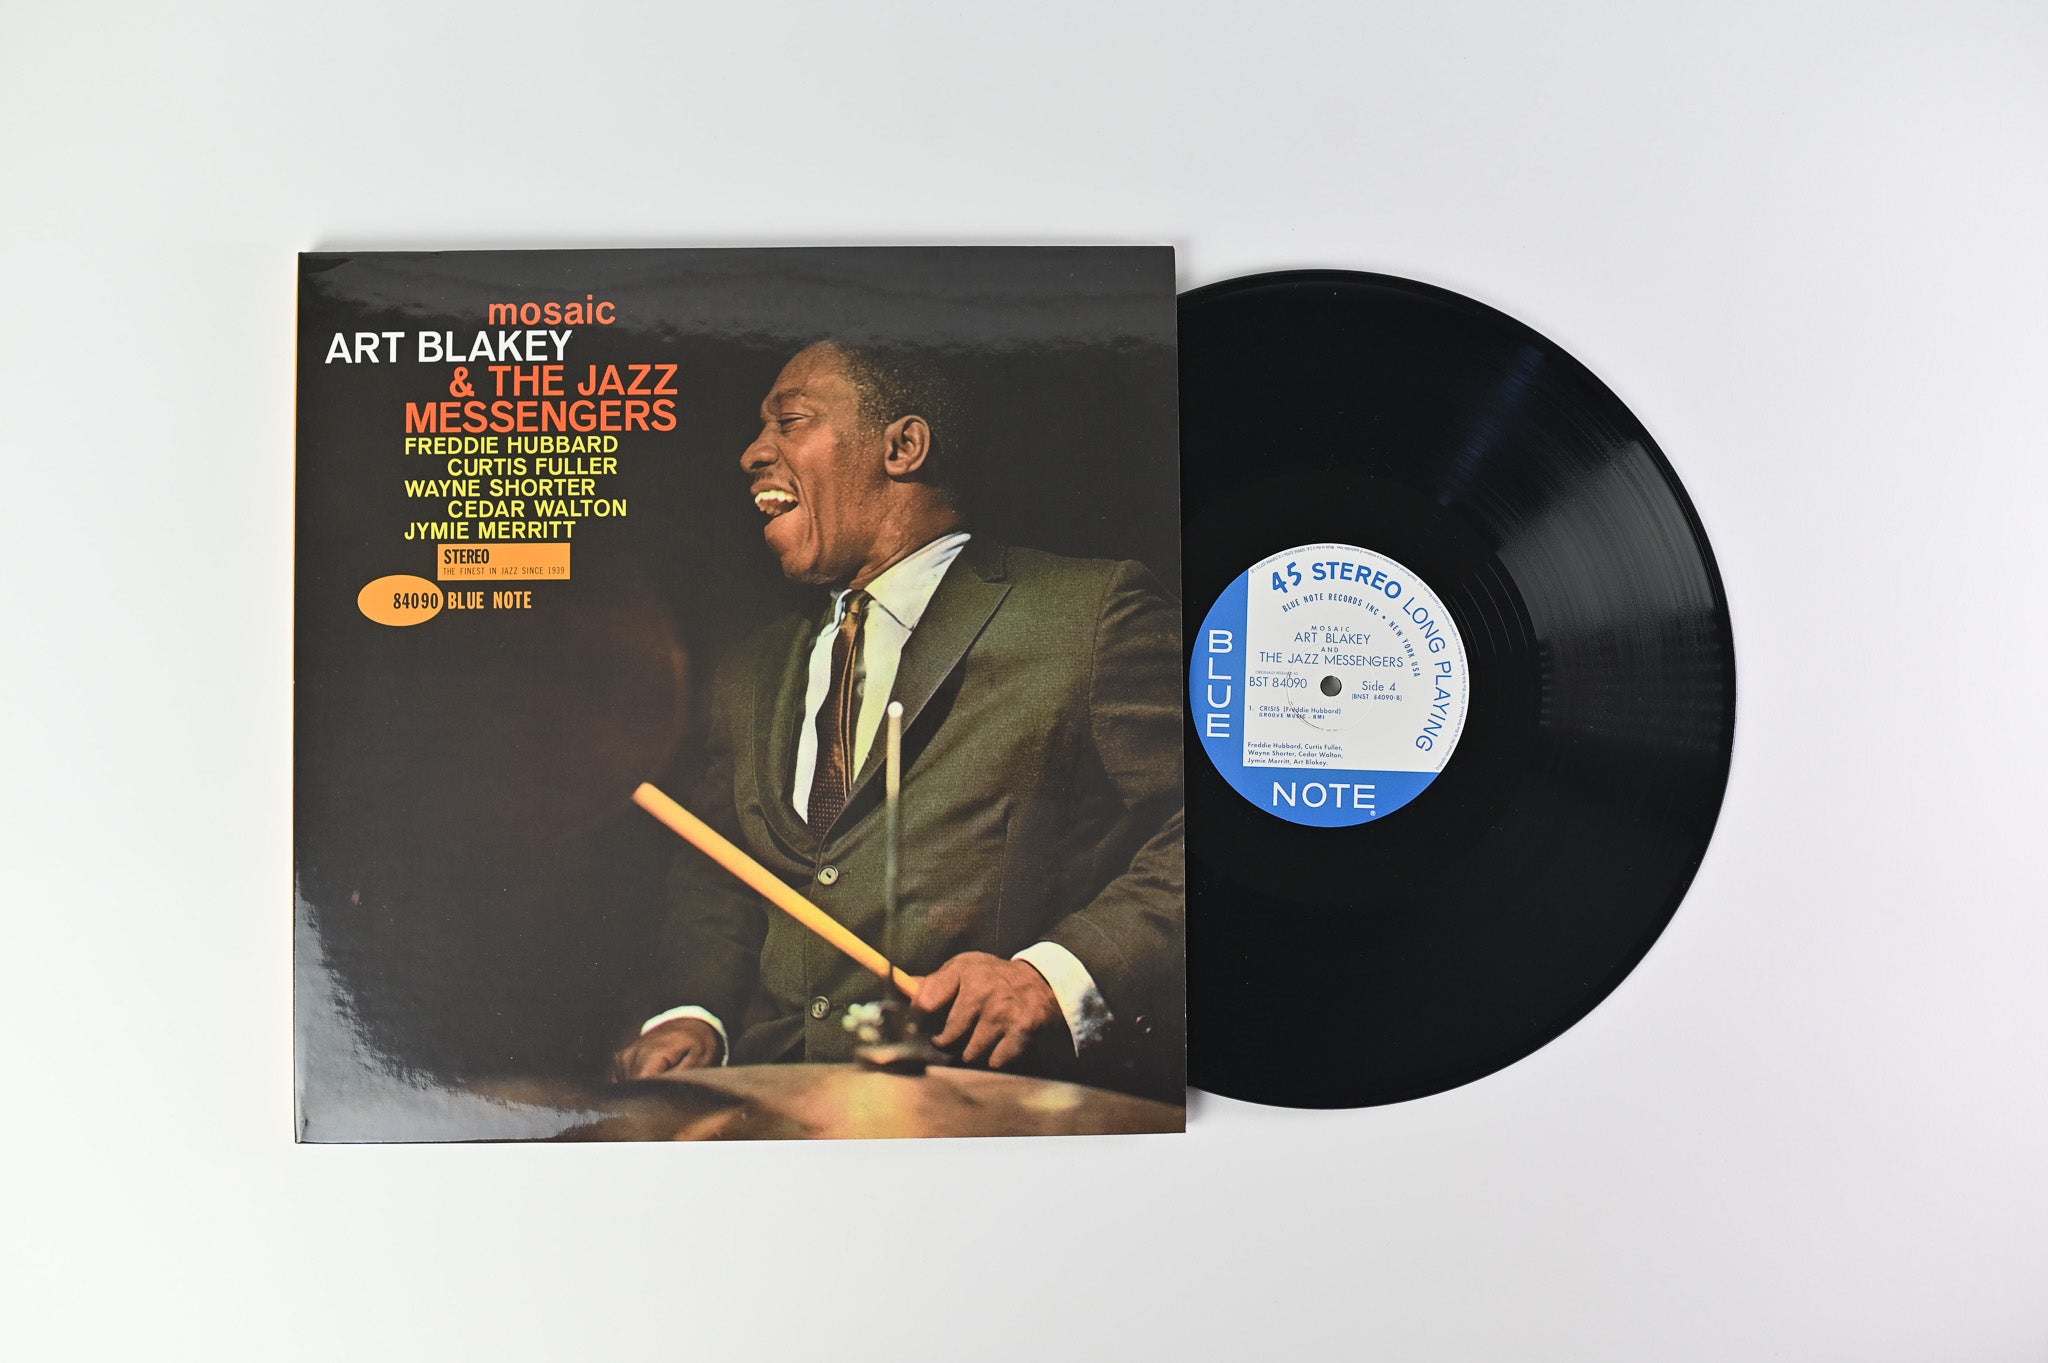 Art Blakey & The Jazz Messengers - Mosaic on Blue Note Music Matters Ltd 45 RPM Reissue